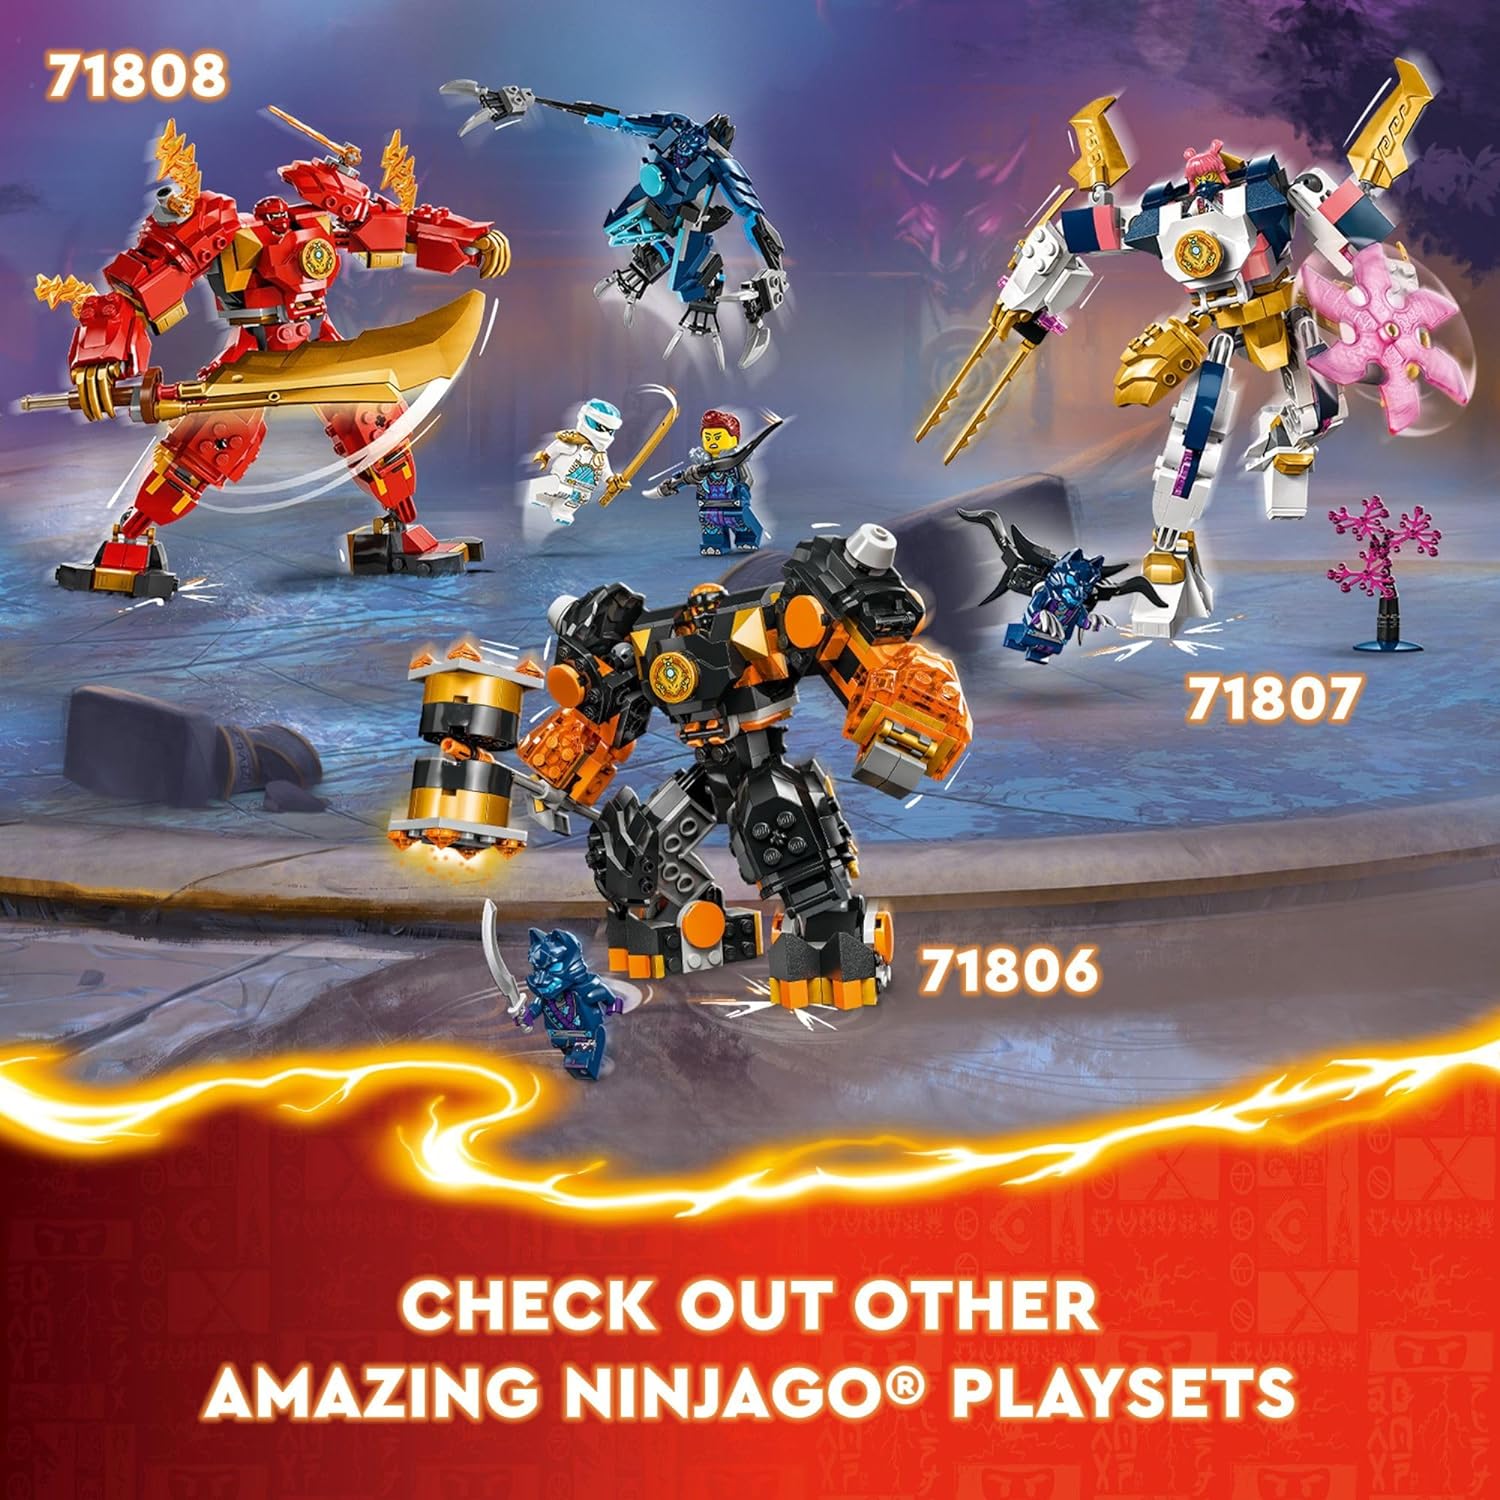 LEGO 71807 NINJAGO Sora’s Elemental Tech Mech Mini Ninja Toy, Customizable Figure, Adventure Toy Set for Kids with Sora Minifigure, Ninja Action Figure.